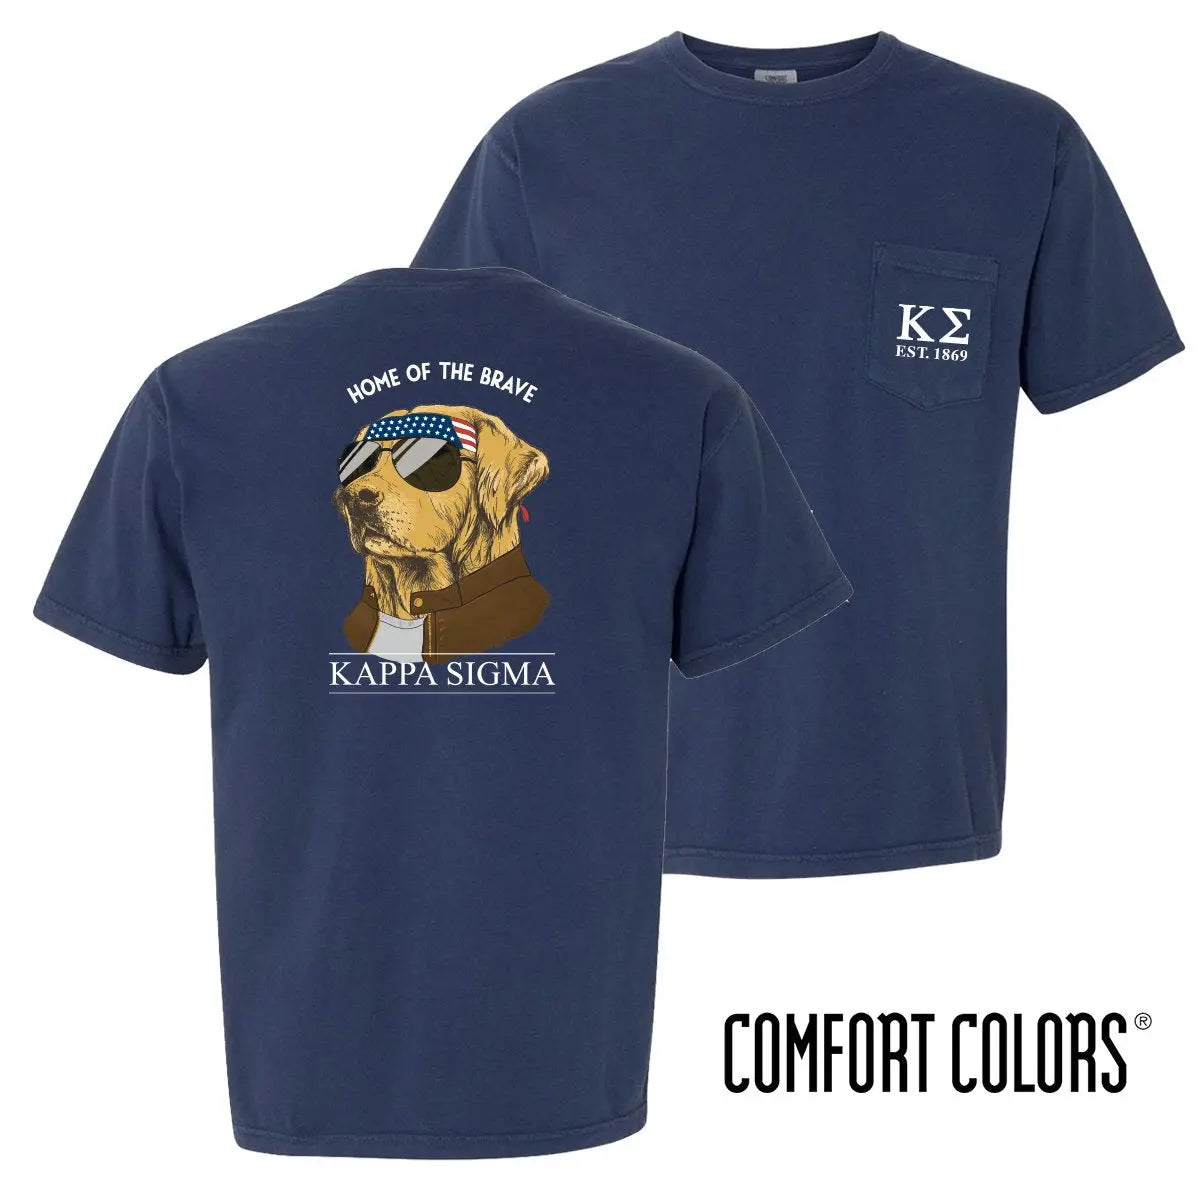 Kappa Sig Comfort Colors Short Sleeve Navy Patriot Retriever Tee - Kappa Sigma Official Store